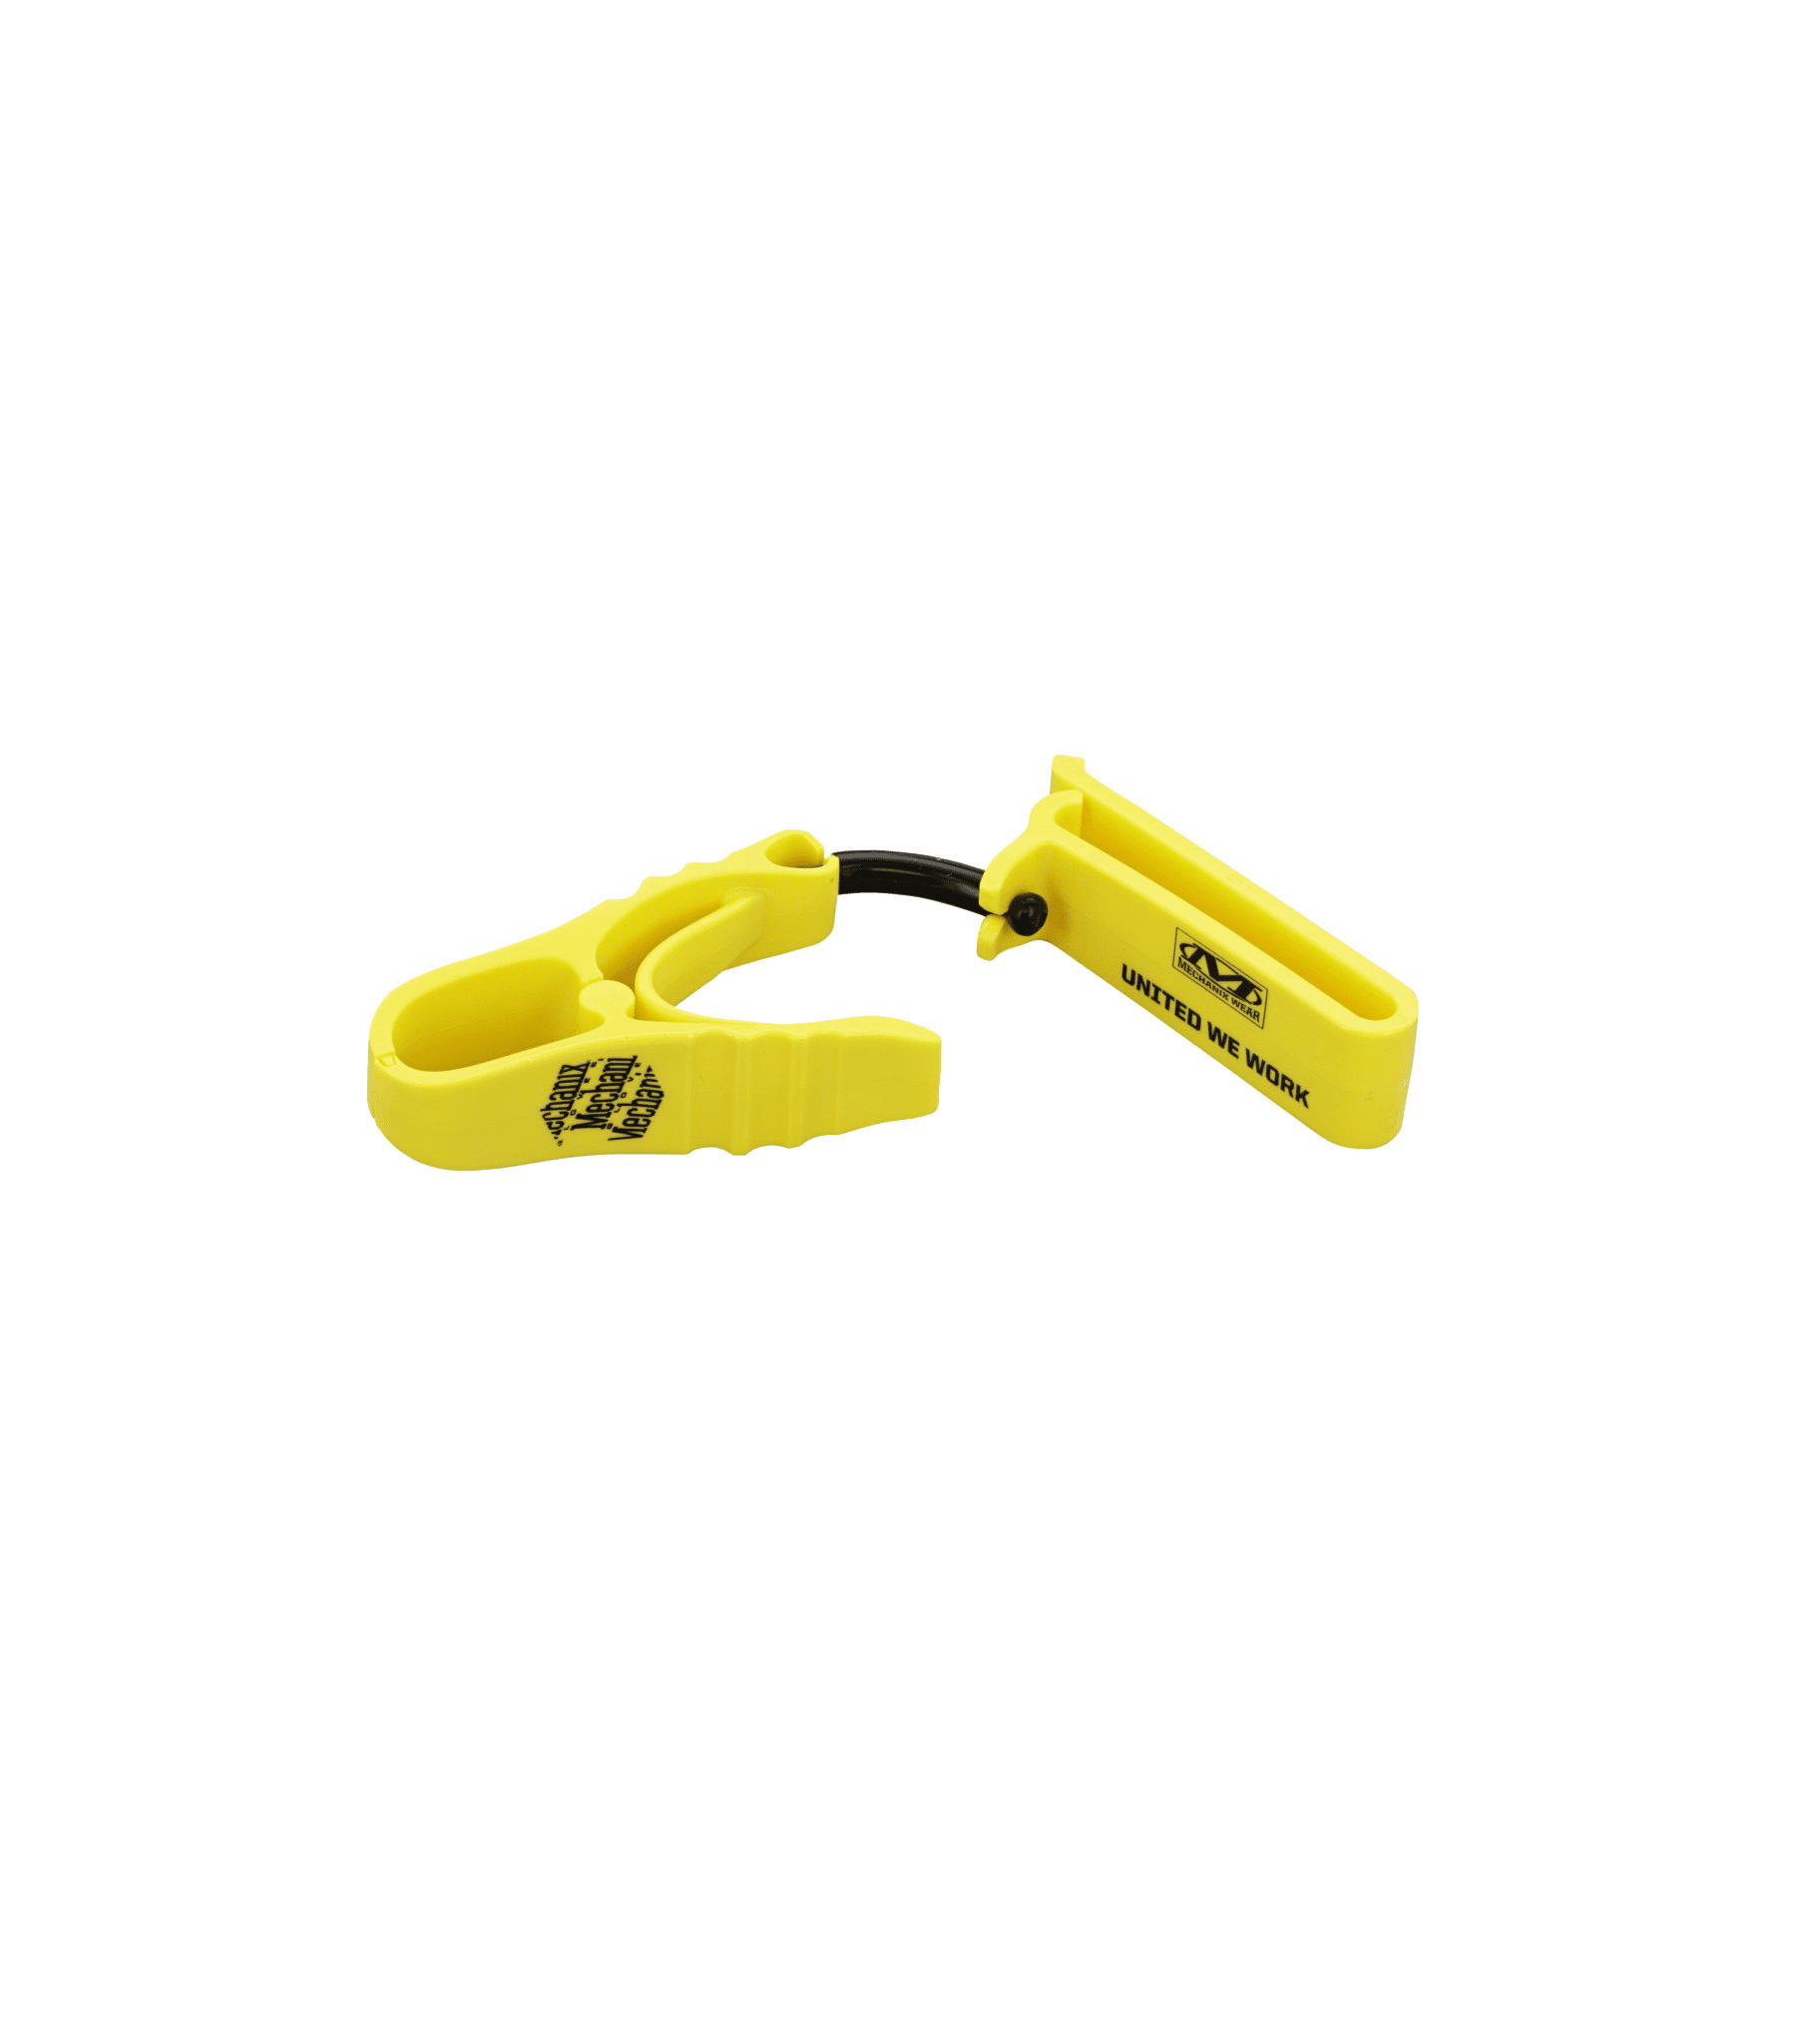 Mechanix Wear Glove Clip (Yellow) MWC-01 - Glove Holders